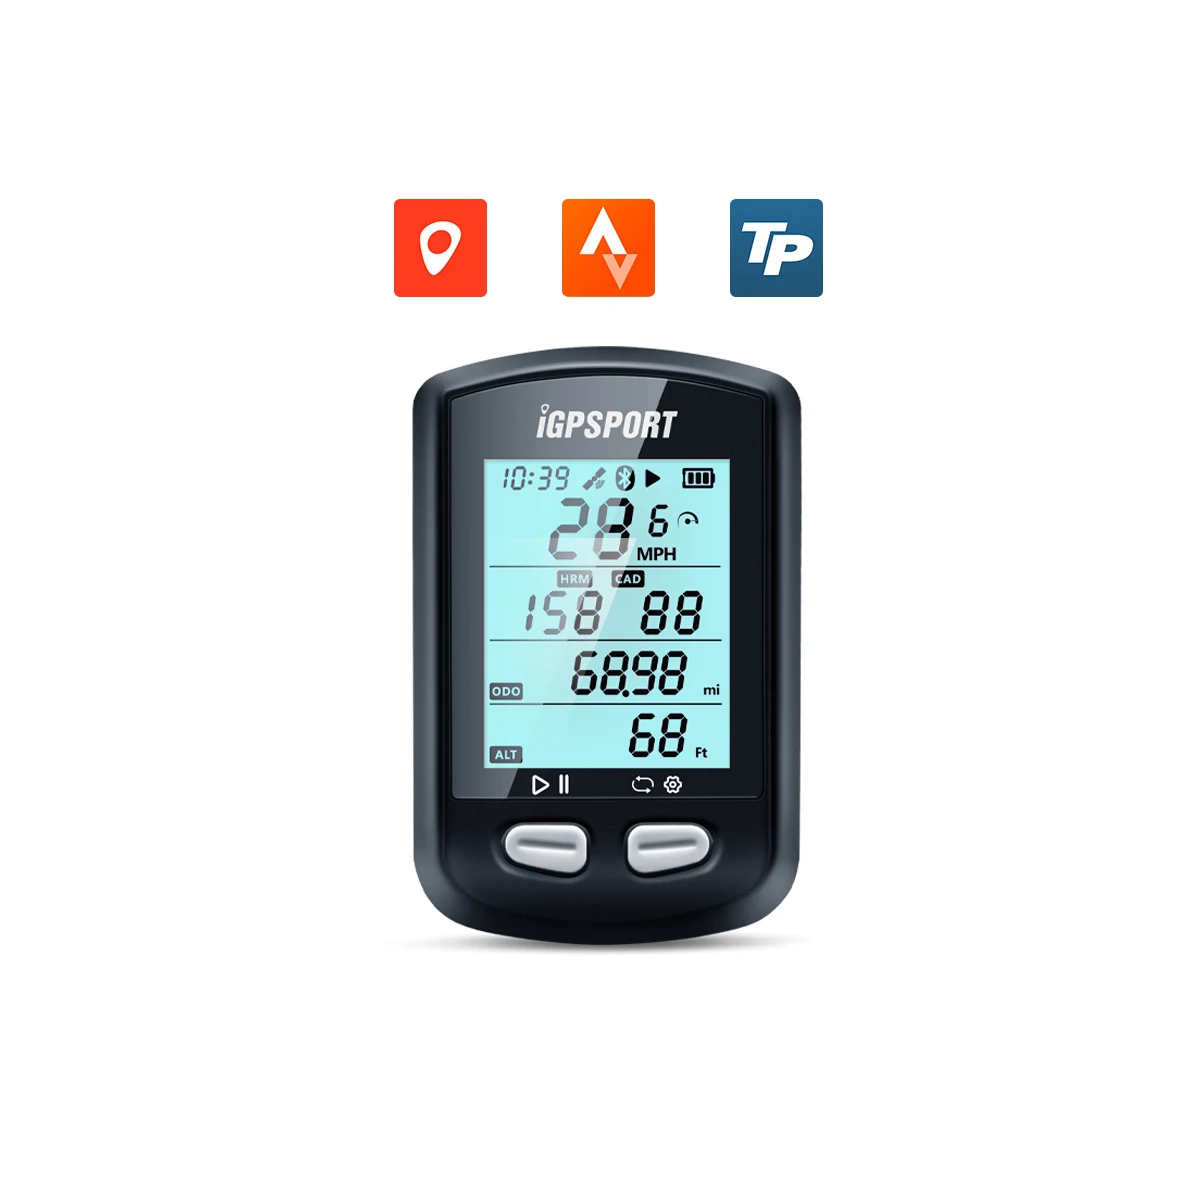 Igpsport GPS -Enabled Bike Bicycle Computer SALE igs10S iGS20E iGS50S iGS620 Wireless Speedometer Odometer |